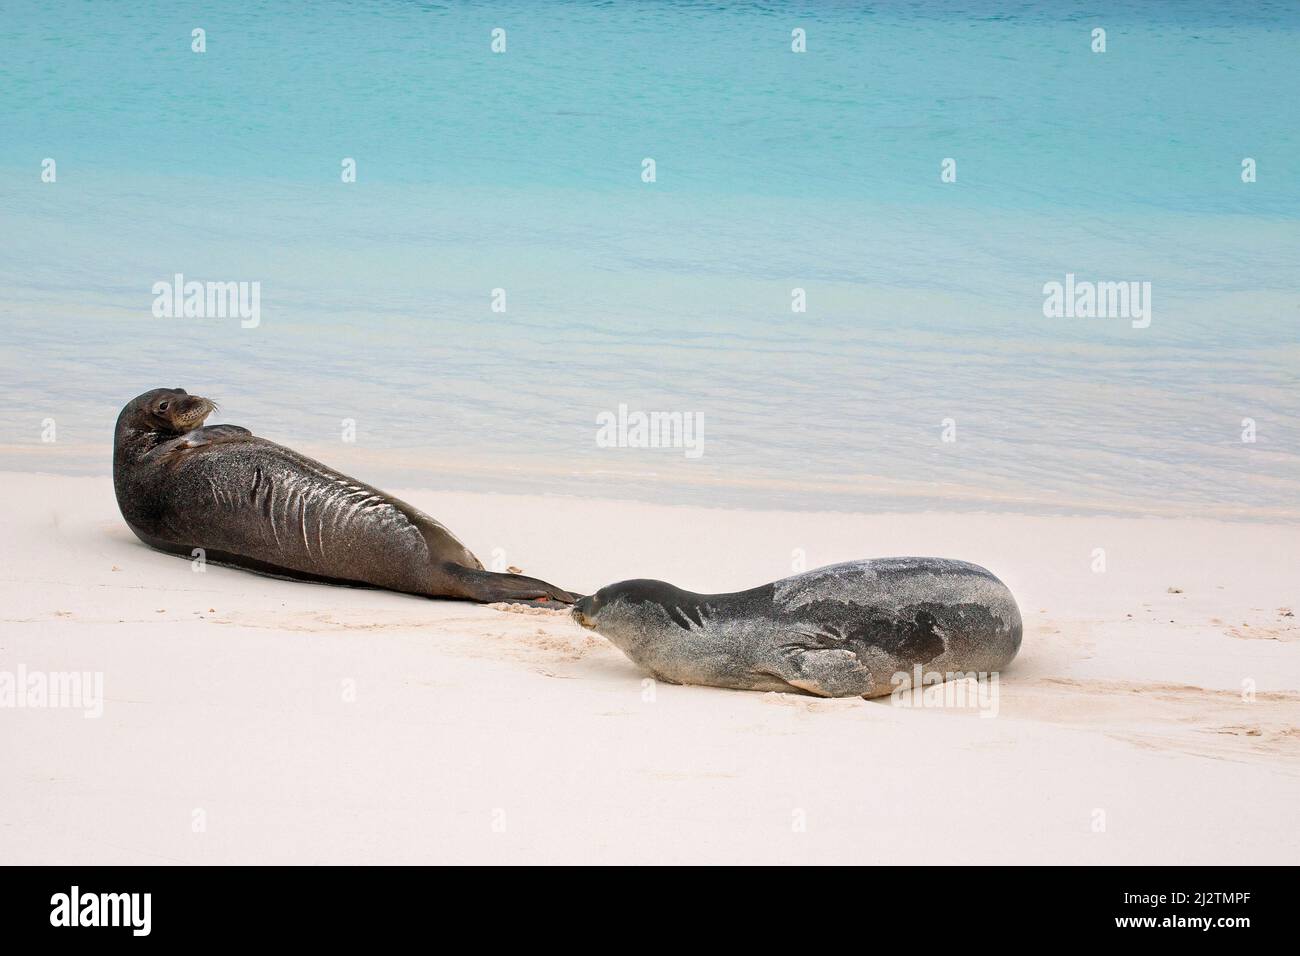 Endangered Hawaiian Monk Seals on Sand Island, Midway Atoll, in Papahanaumokuakea Marine National Monument, Pacific Ocean. Neomonachus schauinslandi Stock Photo